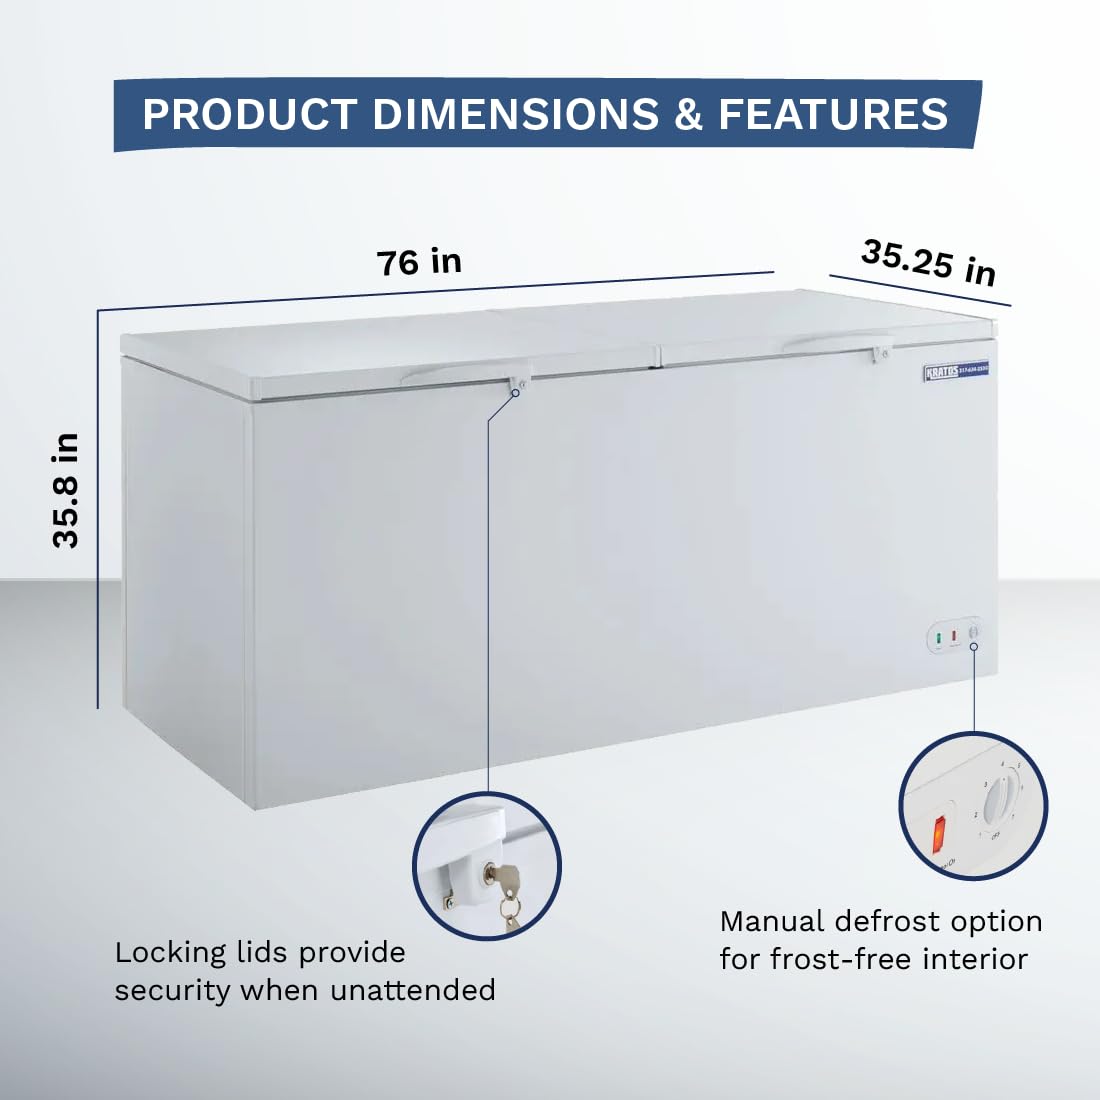 Kratos Refrigeration 69K-751HC Solid Top Chest Freezer, 30.0 Cu. Ft. Capacity